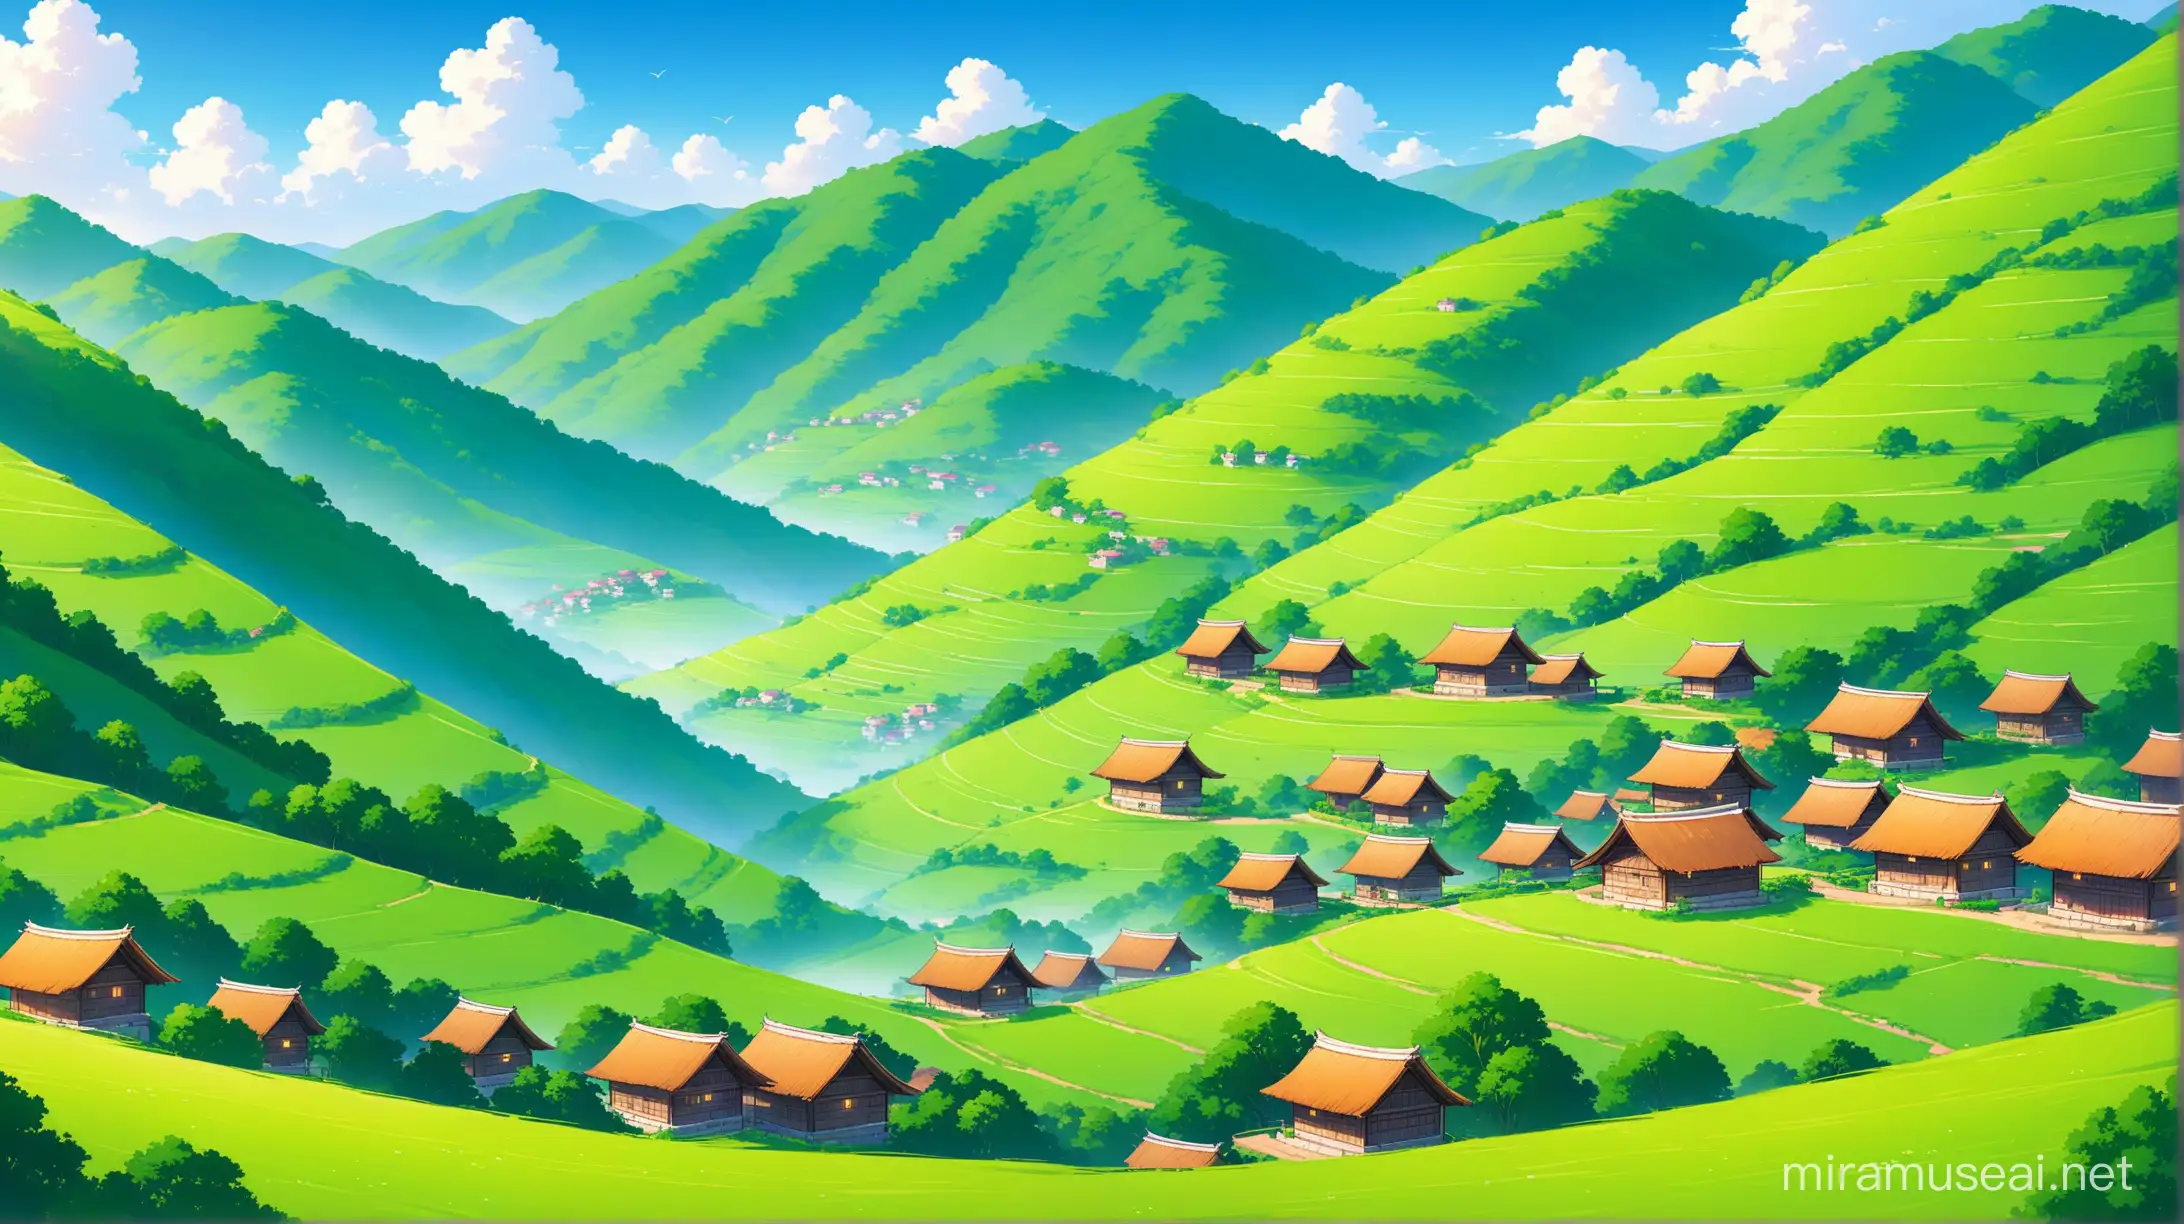 A serene village nestled amidst lush green hills.